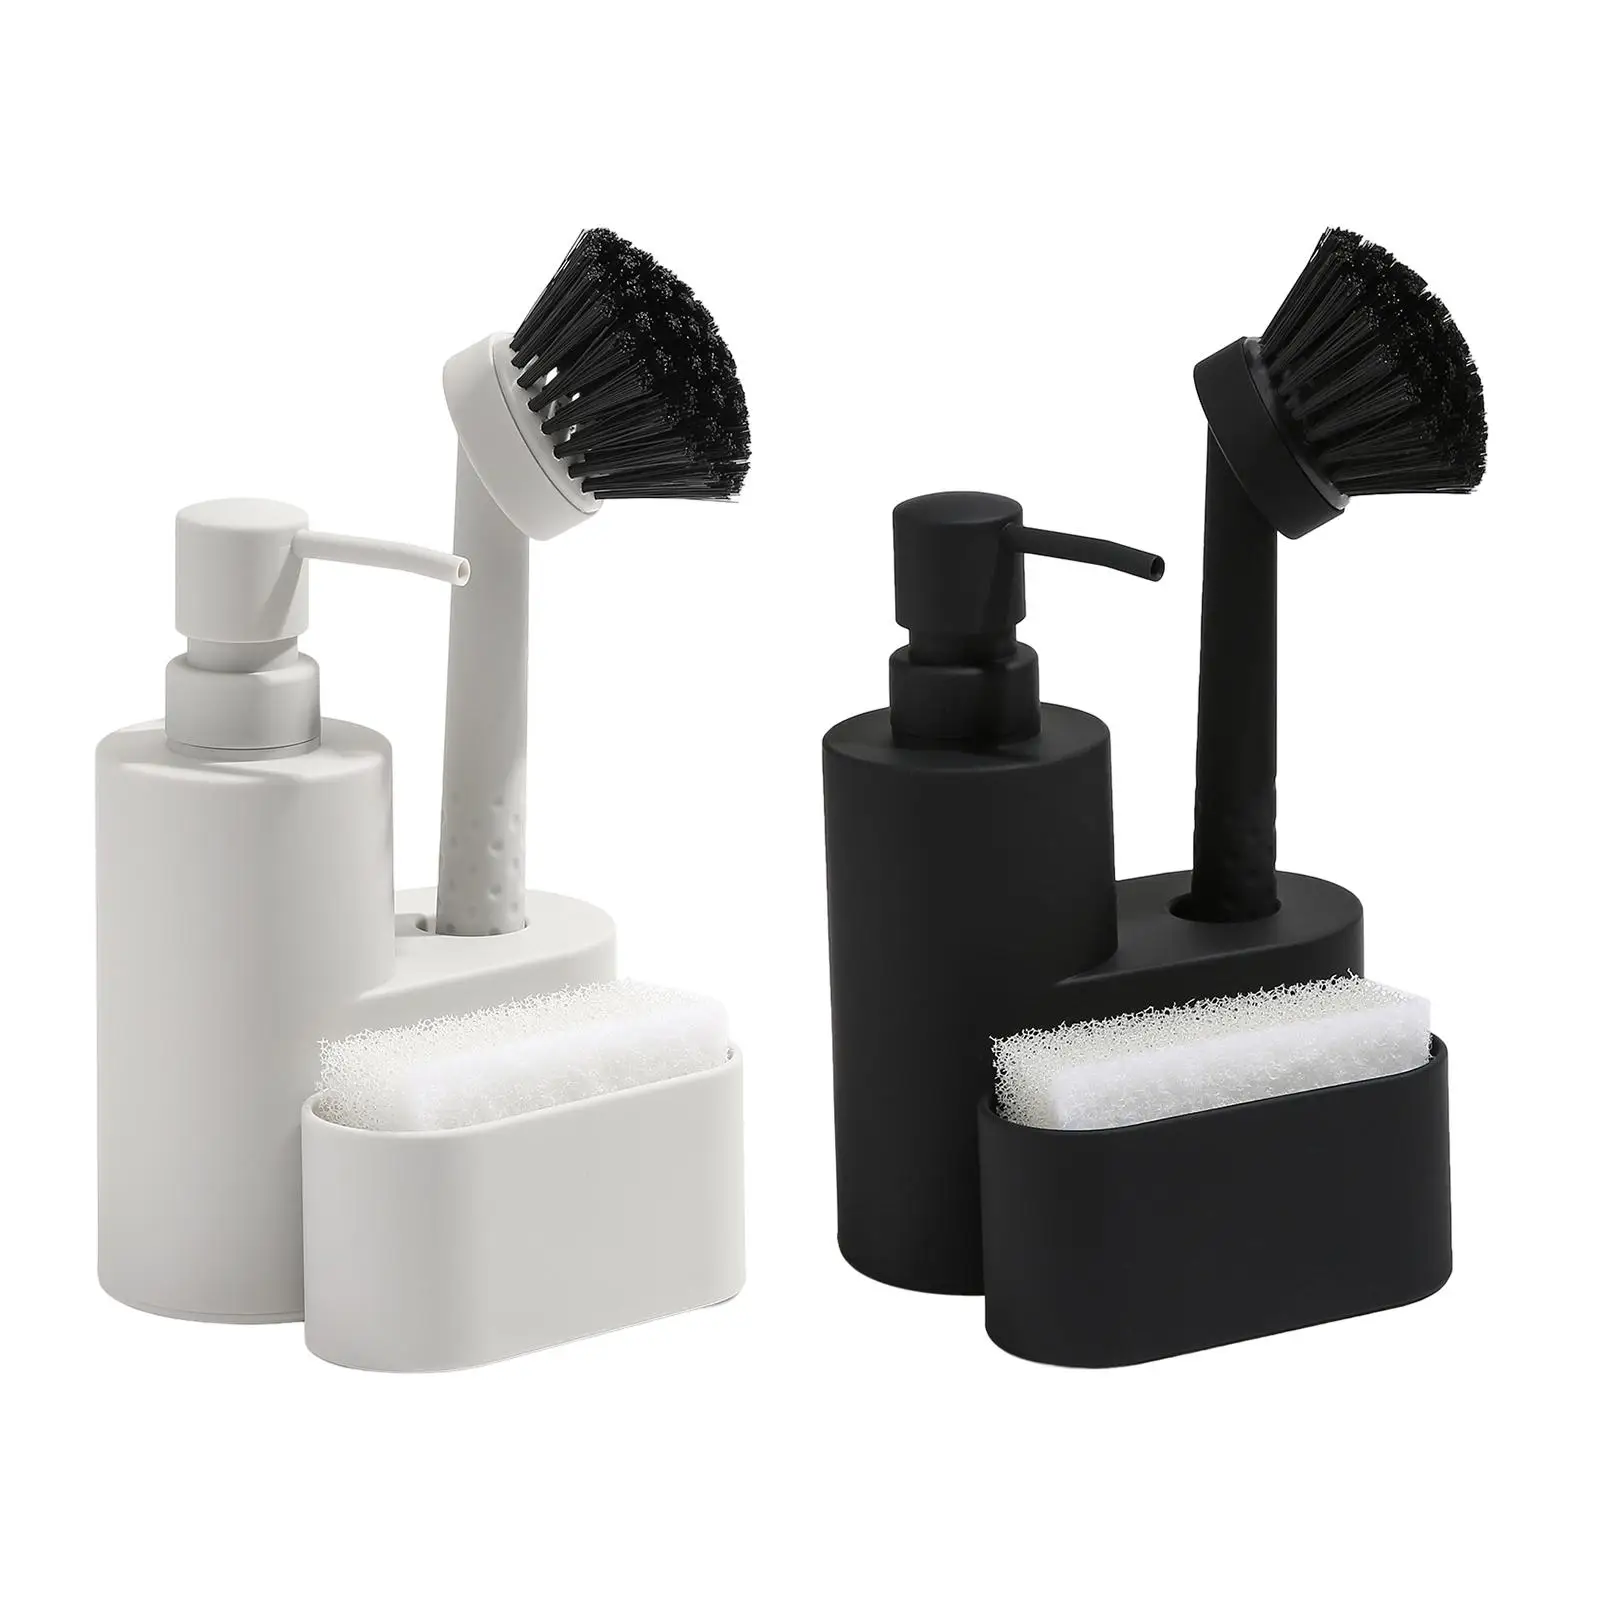 Soap Dispenser with Sponge Holder Accessories -Soap Dispensers for Home Bathroom